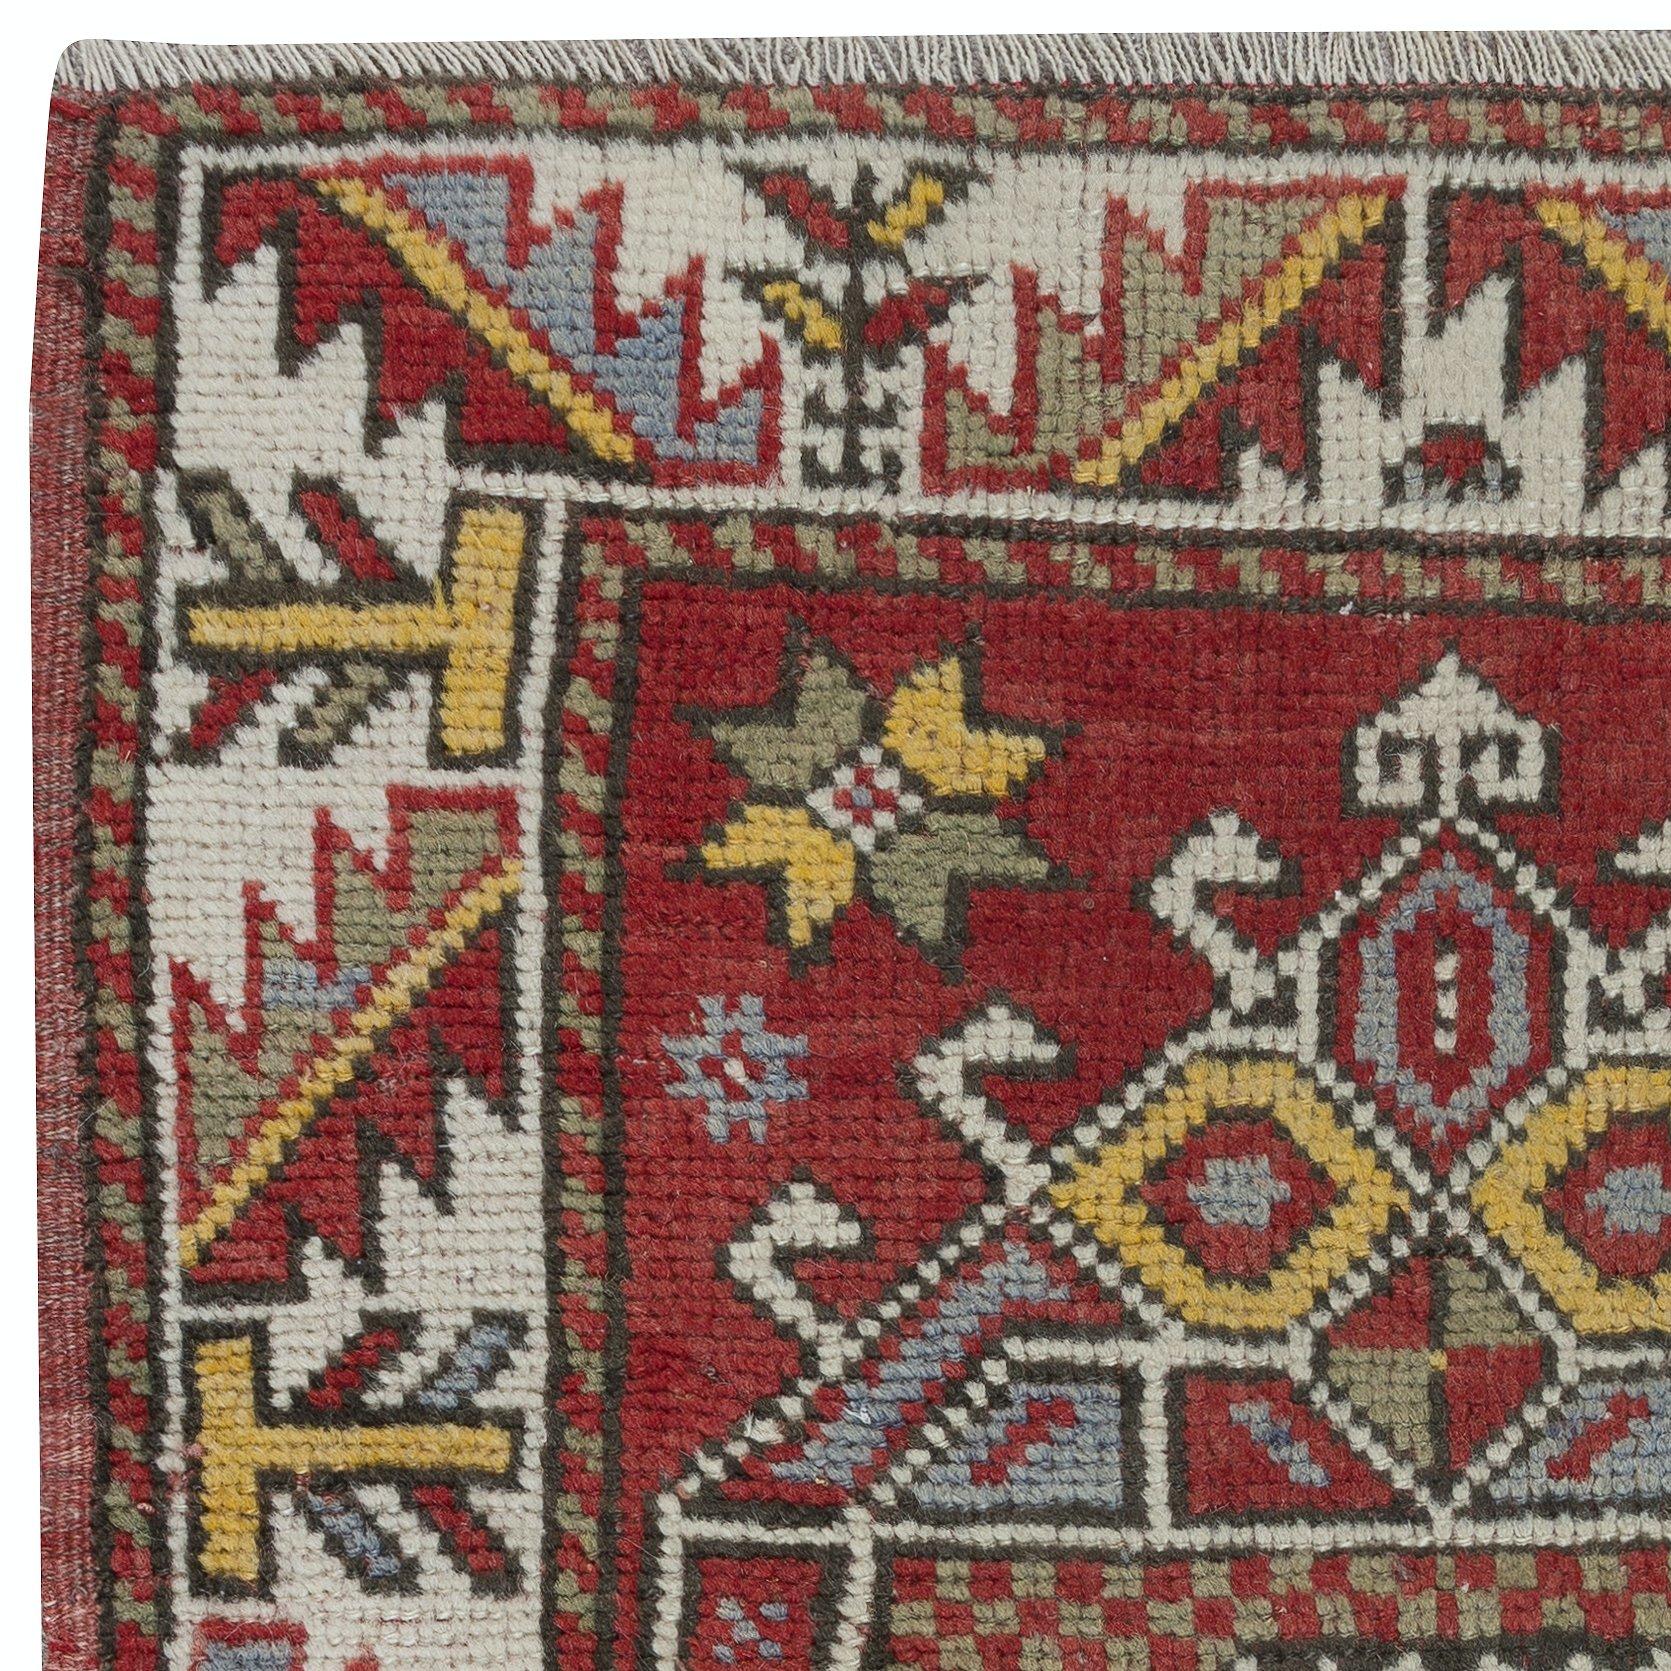 Hand-Knotted 2.4x3.2 Ft Handmade Geometric Medallion Design Rug, Vintage Turkish Red Carpet For Sale